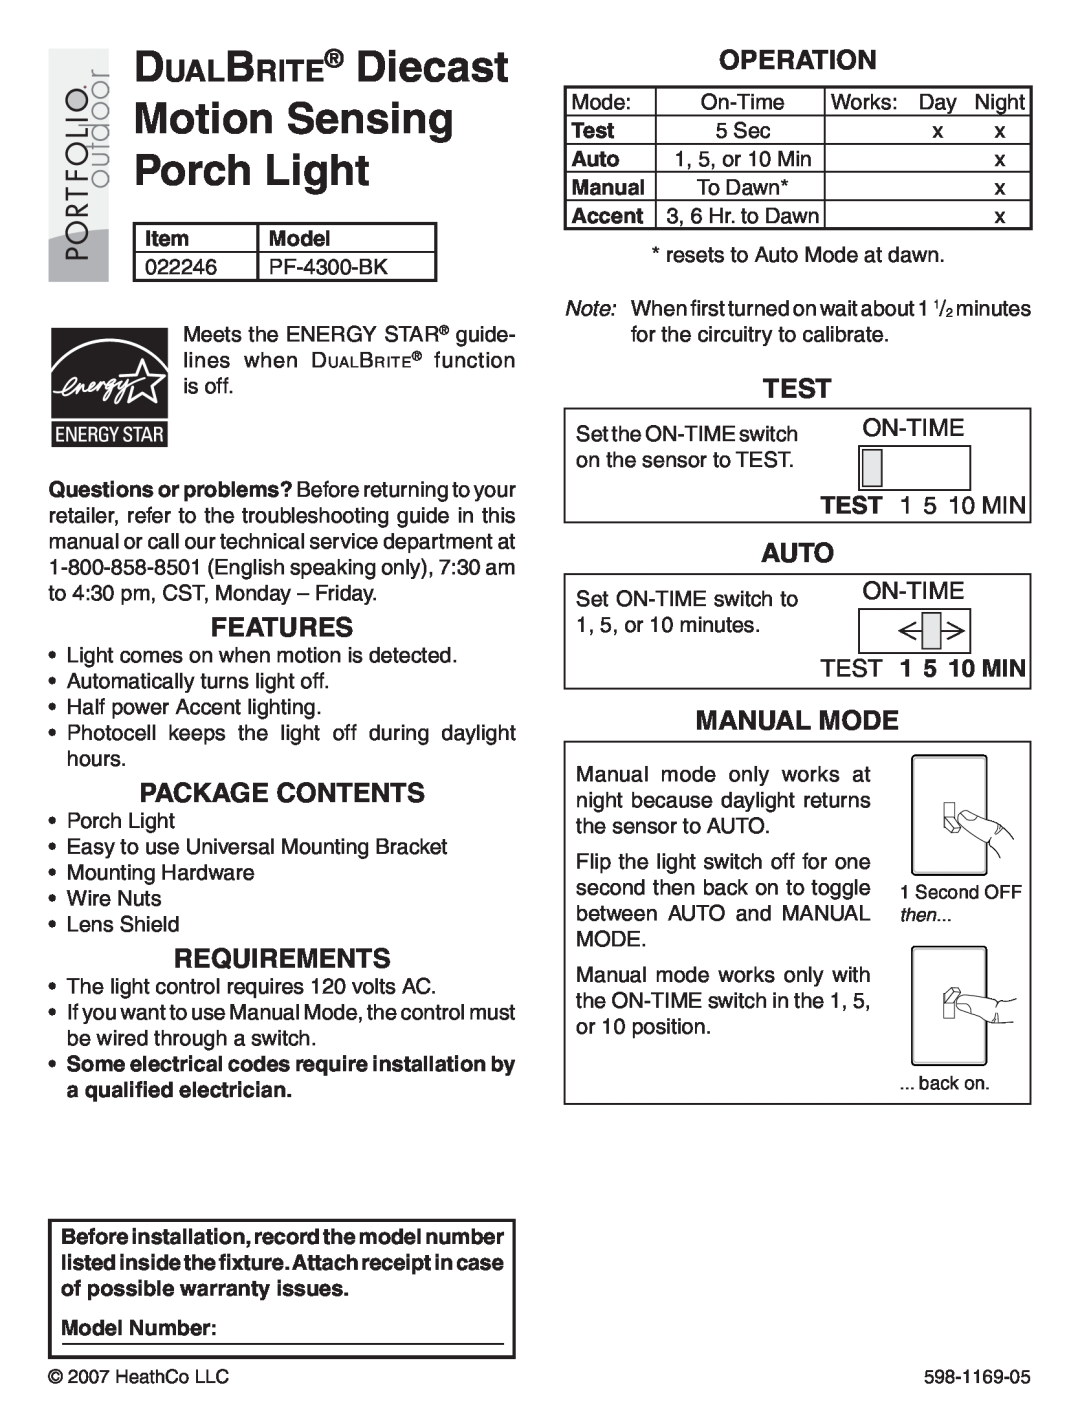 Heath Zenith PF-4300-BK warranty DualBrite Diecast Motion Sensing Porch Light, Features, Operation, Test, Auto, On-Time 